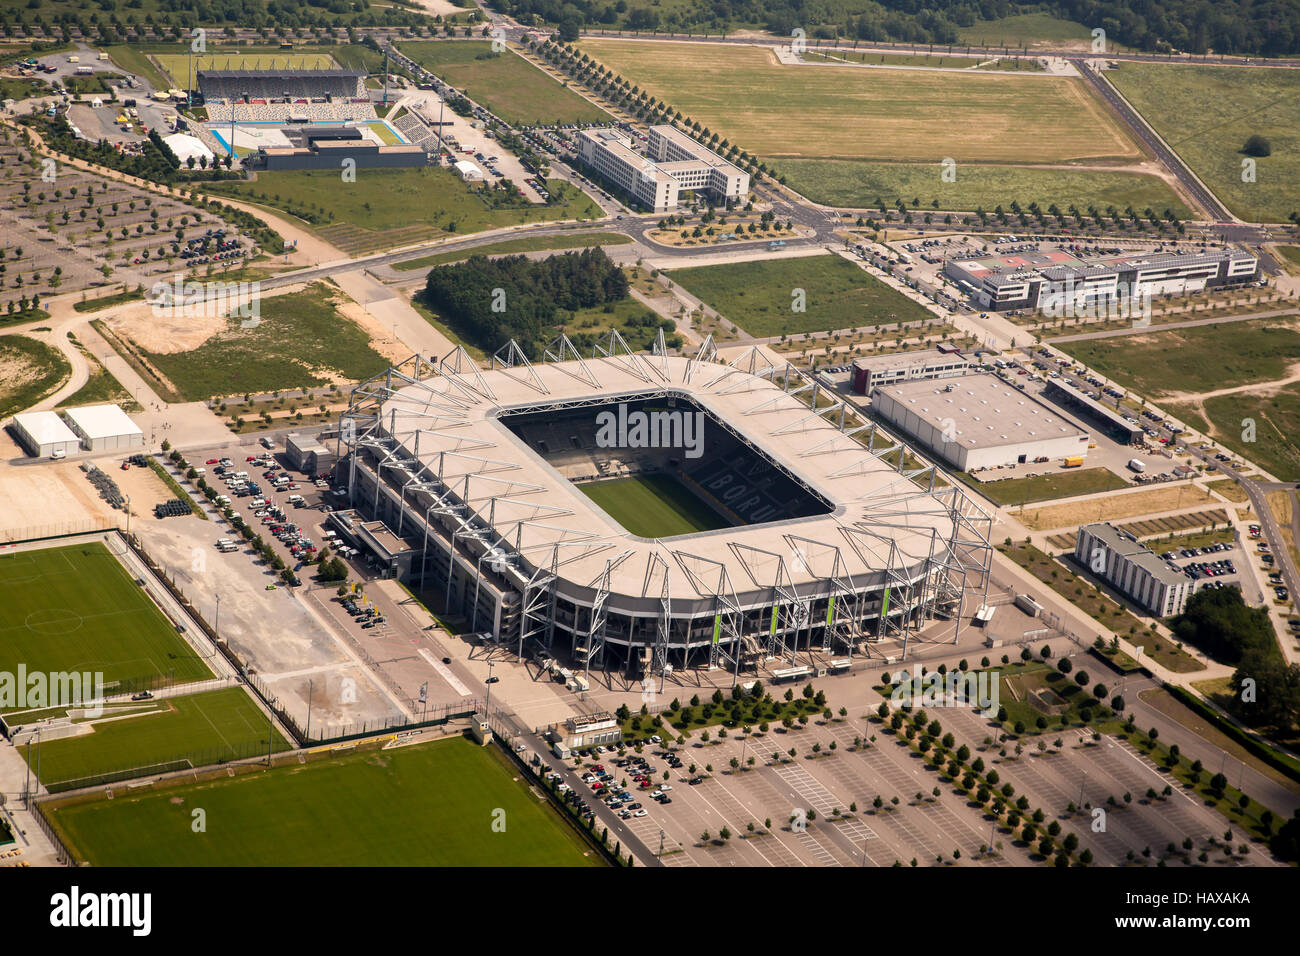 Football Stadium Borussia Mönchengladbach Stock Photo